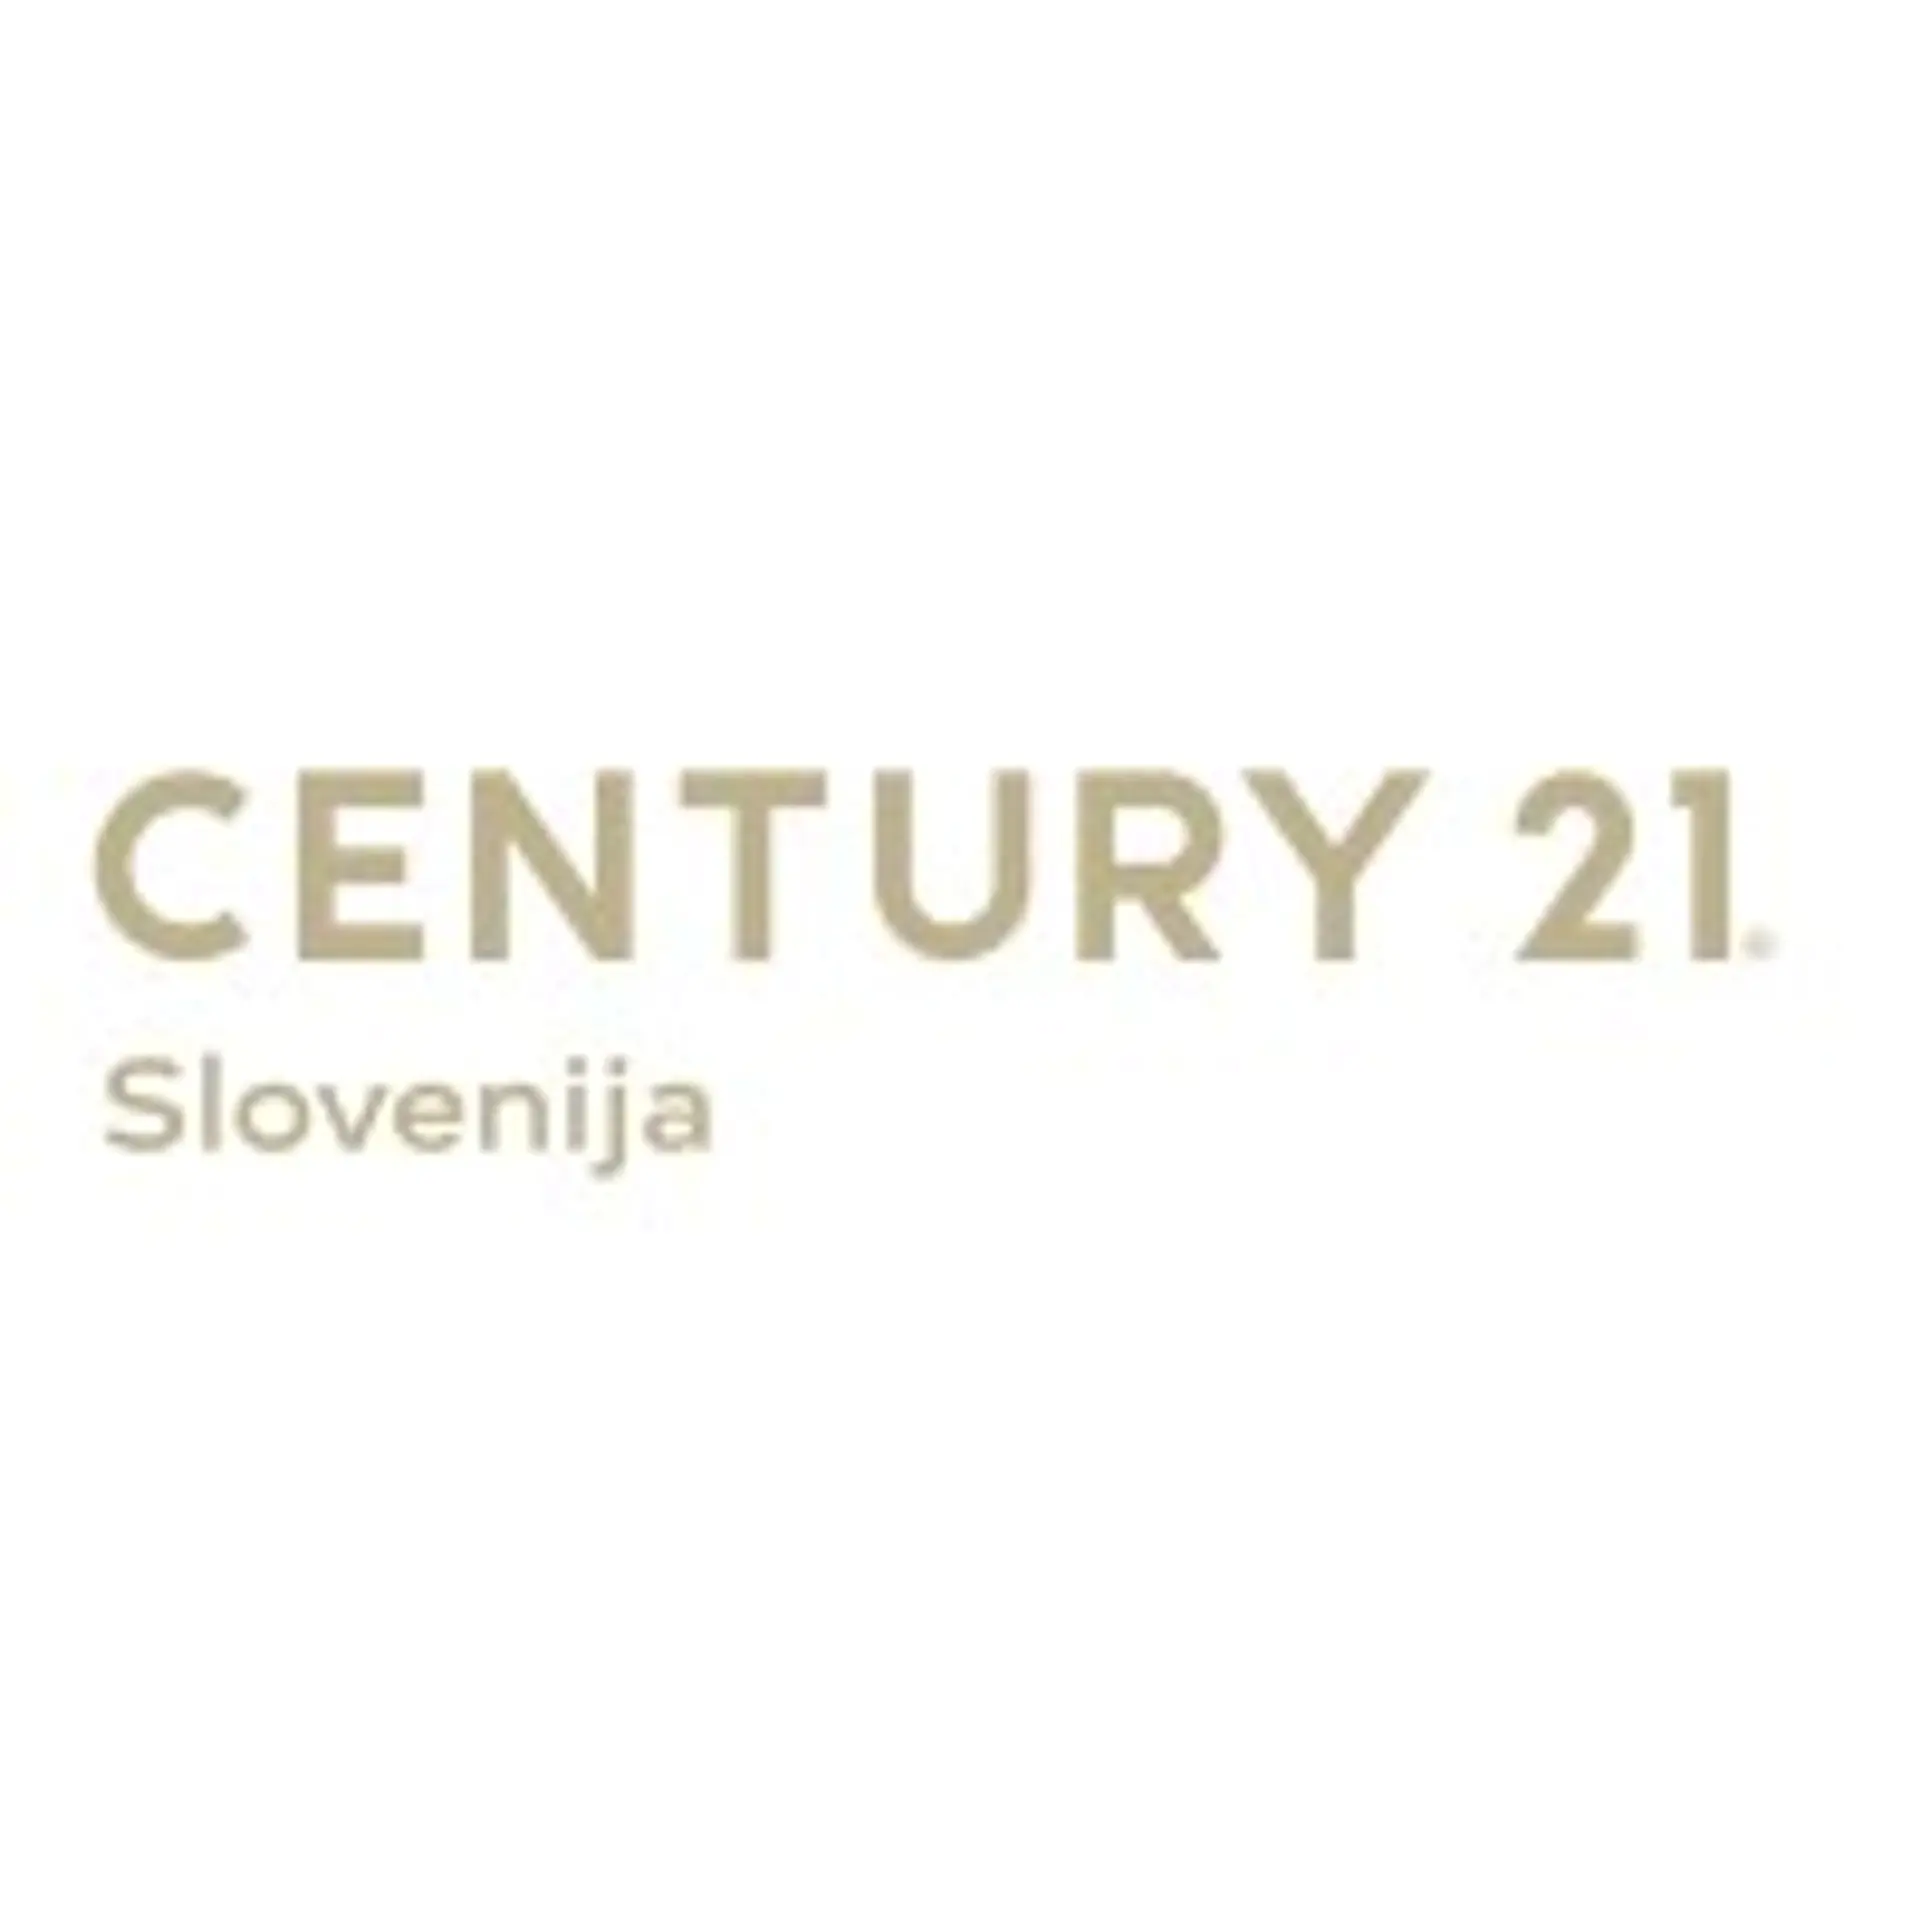 Century21 Slovenia